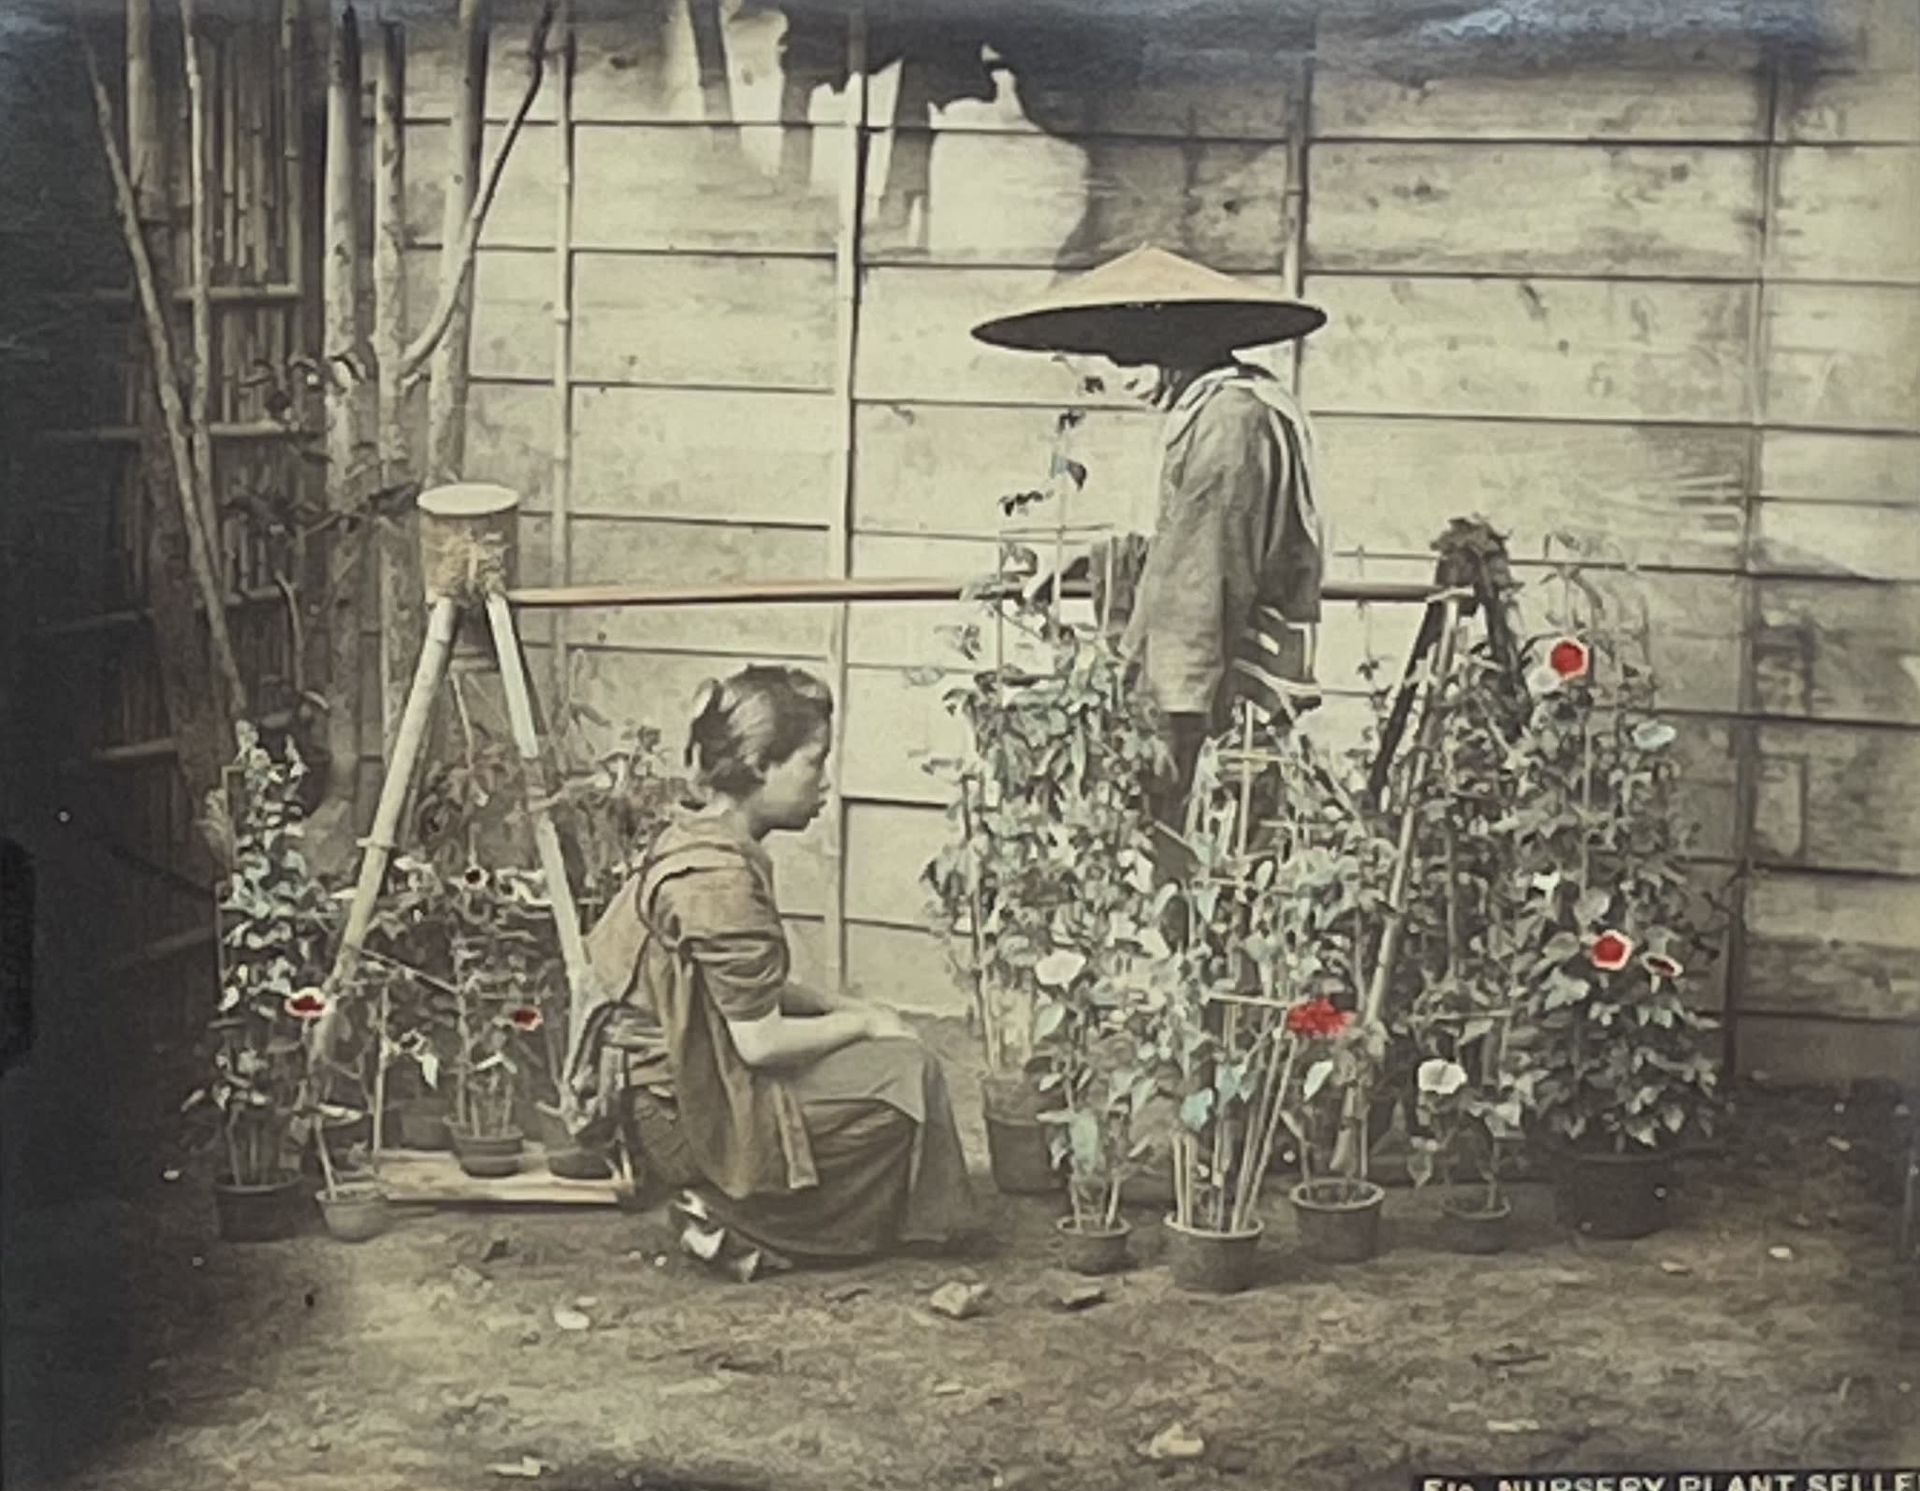 ANONYME. "Nursery Plant Seller" (ca 1860-1880). Print on albumen paper, titled, &hellip;